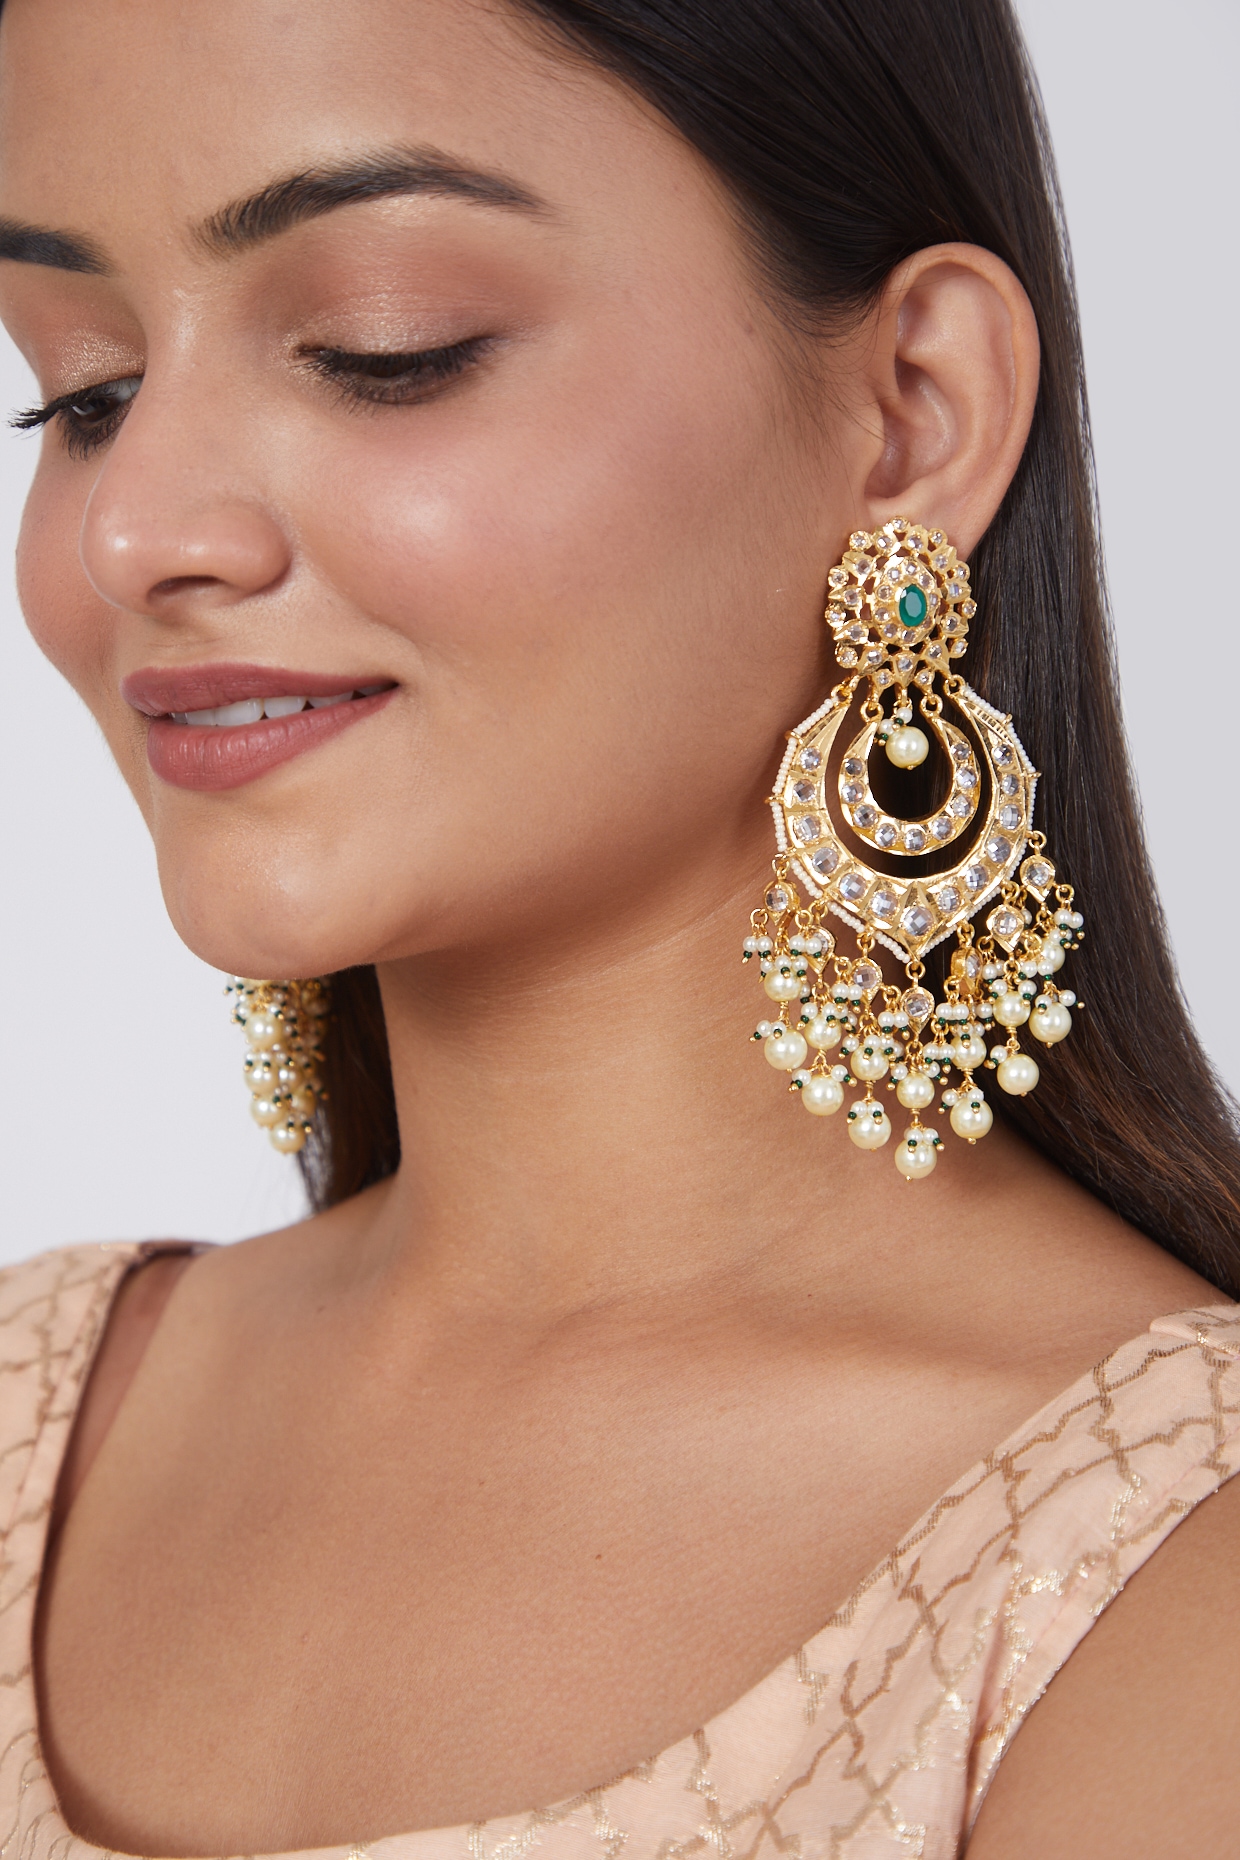 Long frock with suitable earrings | Party wear indian dresses, Long frocks,  Long sleeve dress